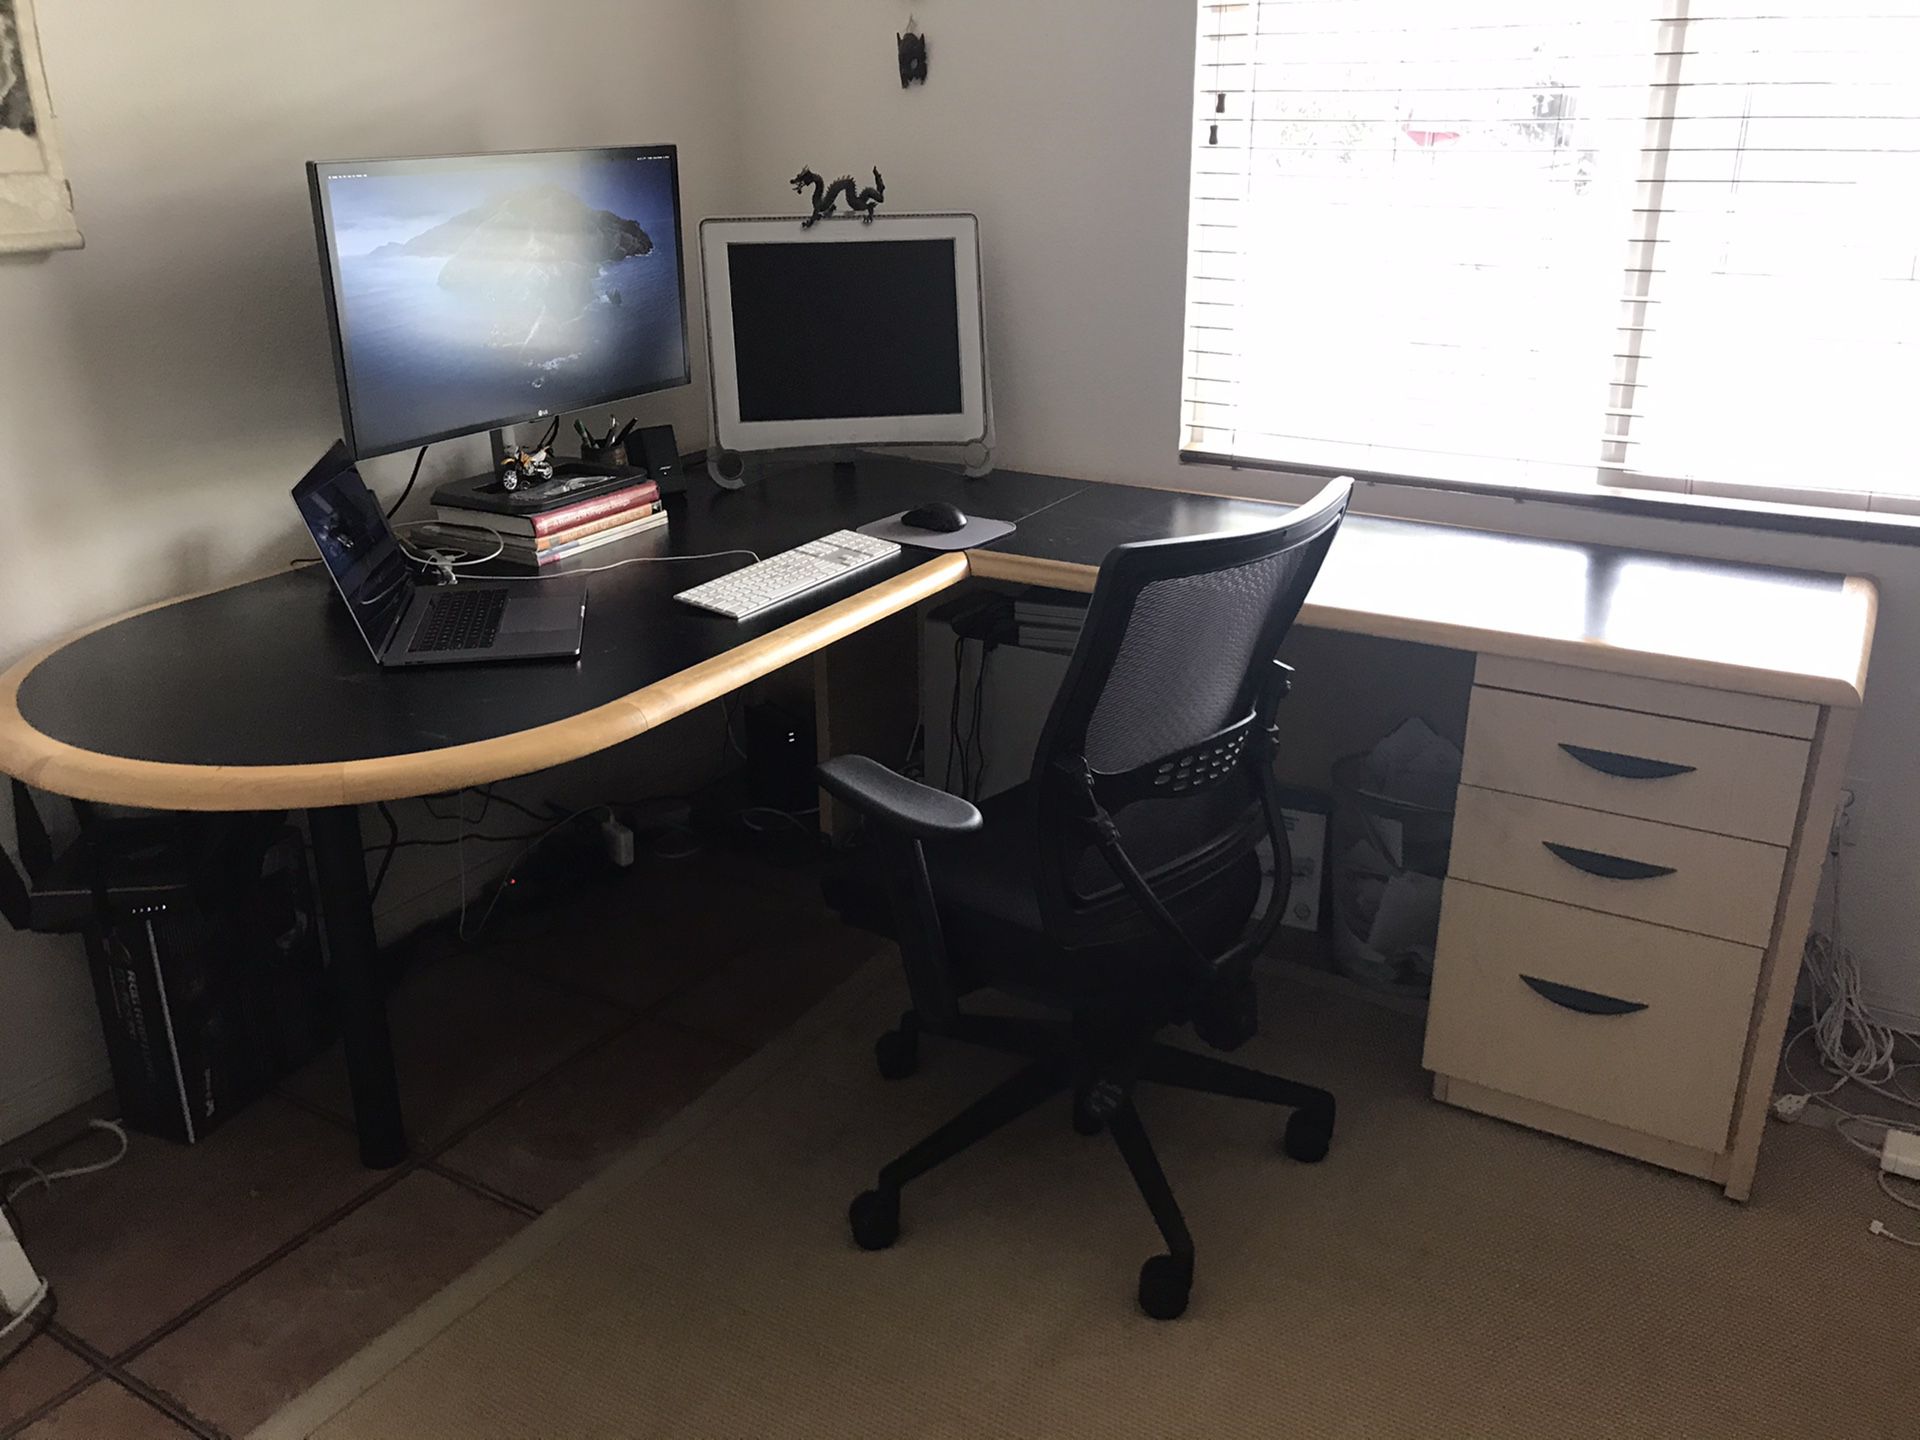 Matching Office desk, drawers, and bookshelf